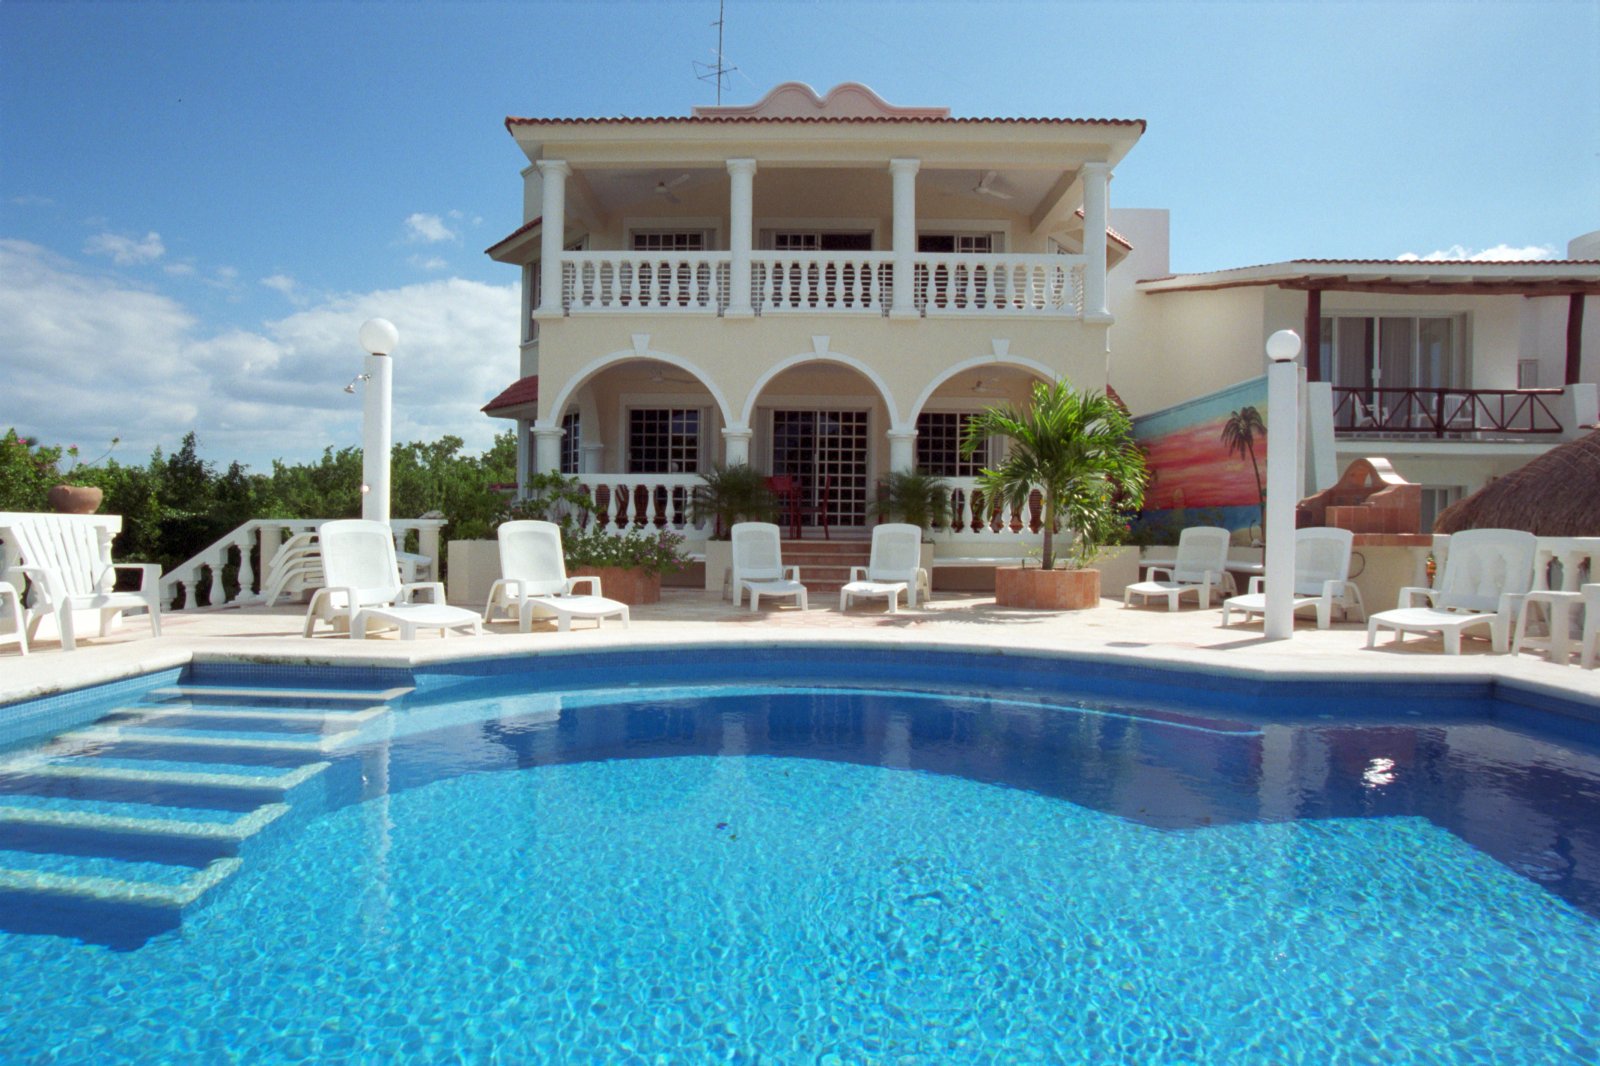 Villa Dos 5 to 6 Bedroom Villa Direct Beachfront - VIlla Dos 6 BR Villa ...